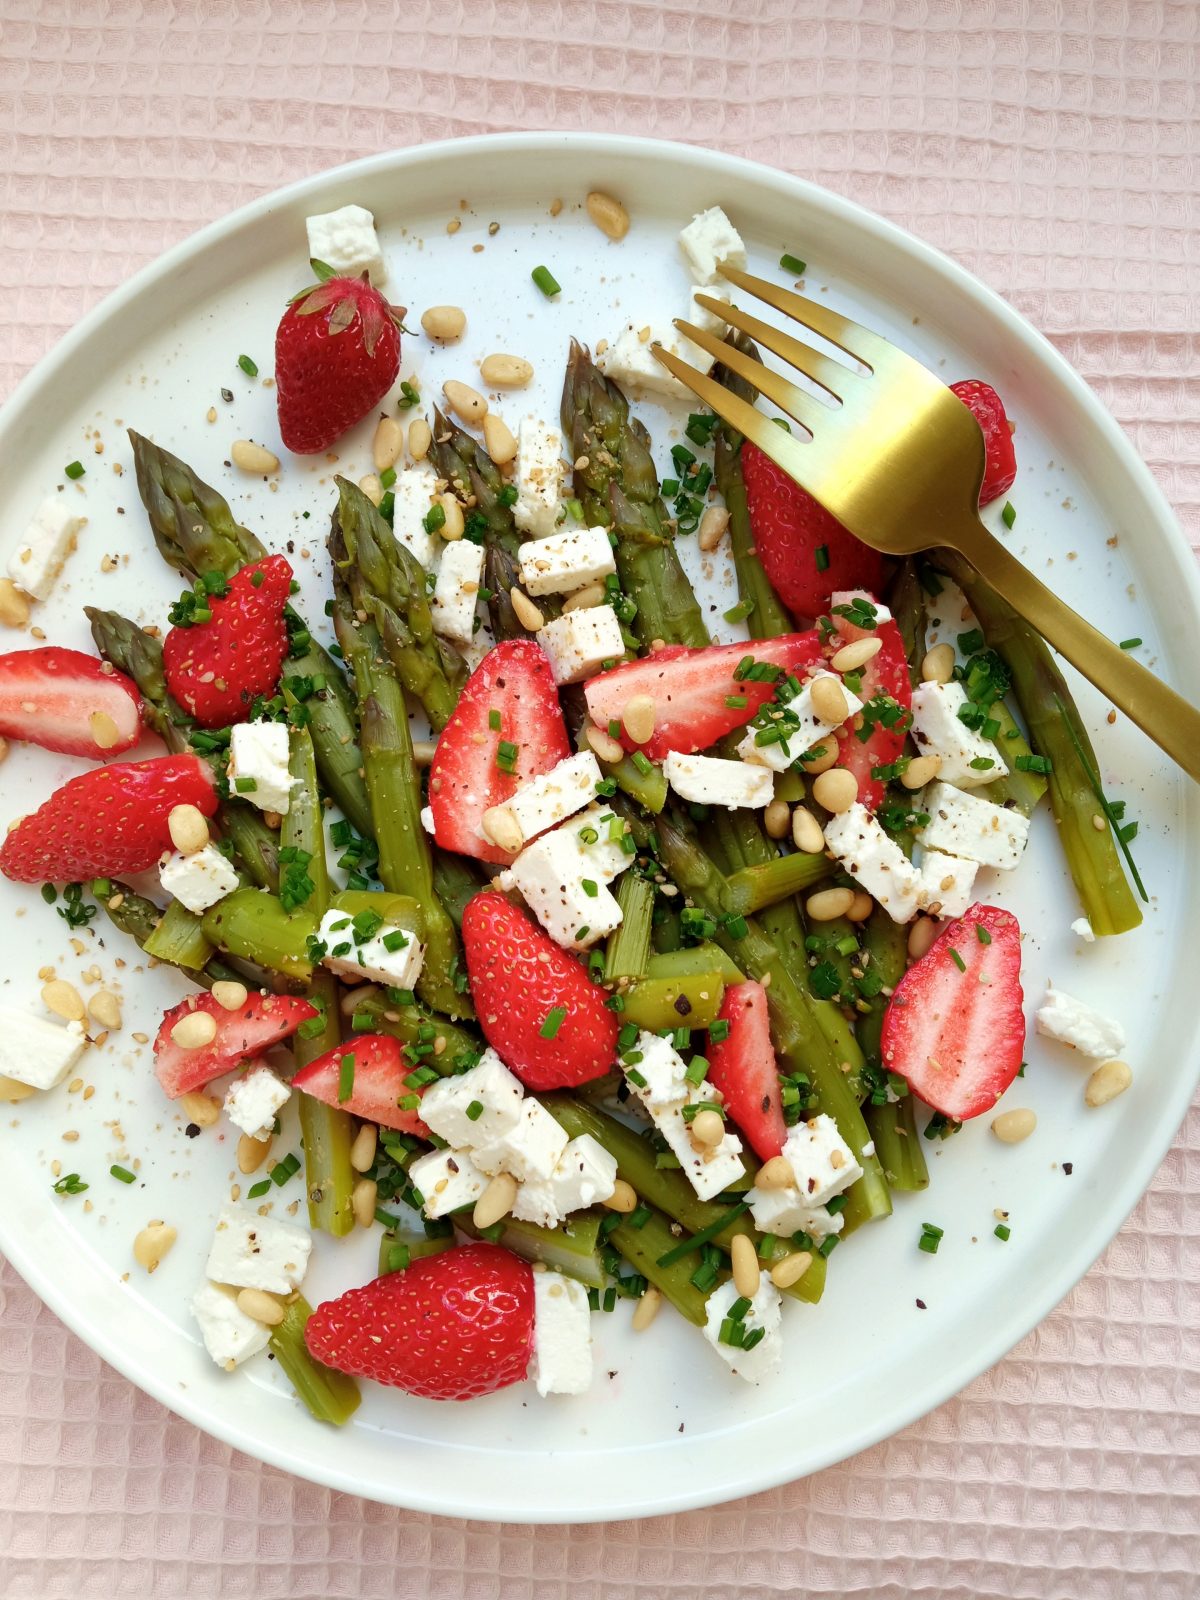 Salade d’asperges fraises et feta | Clémence Chabbert Naturopathie